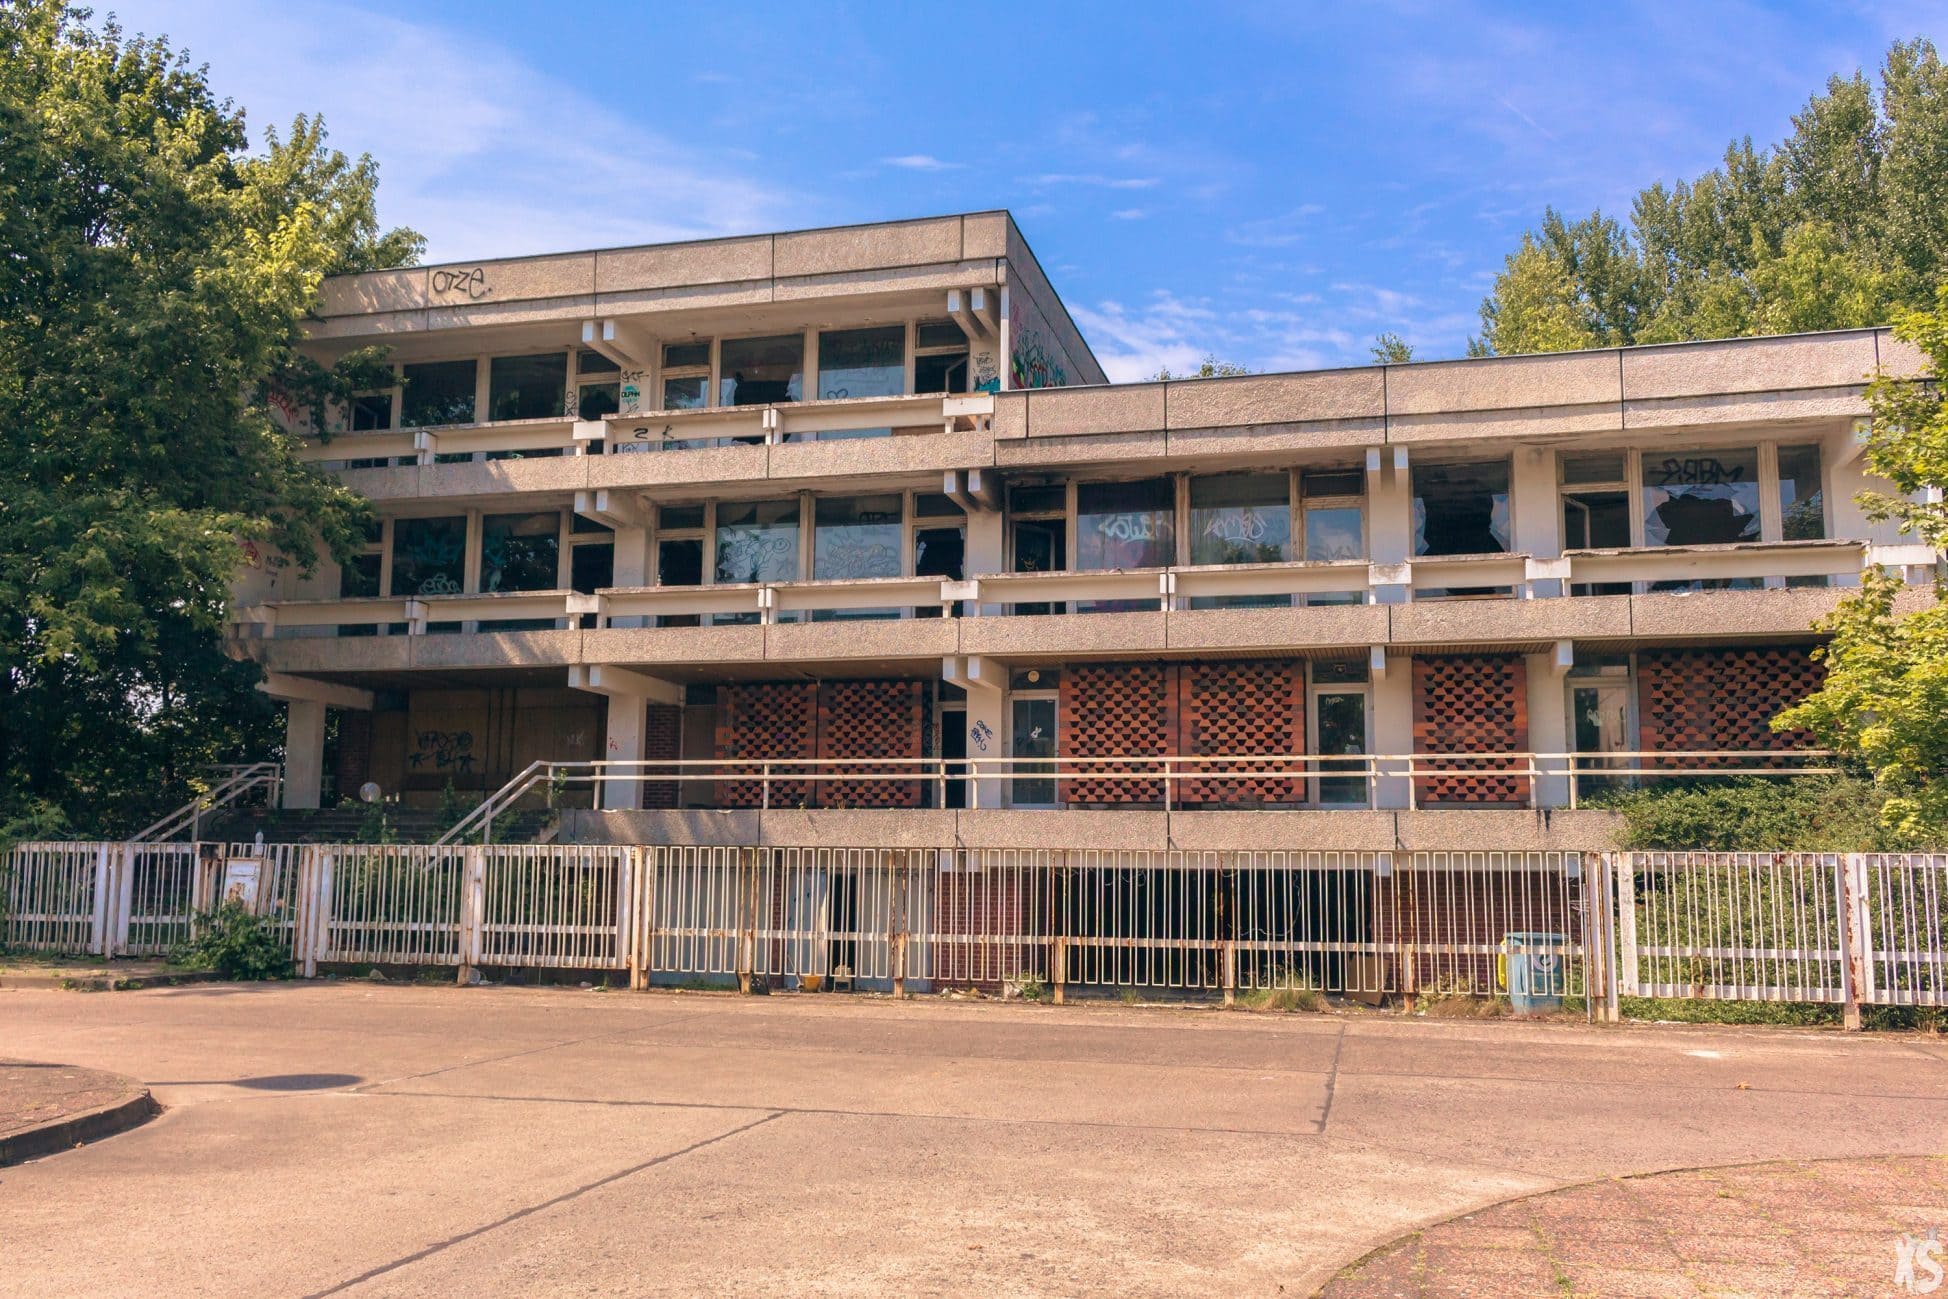 Embassy of Iraq abandoned in Berlin